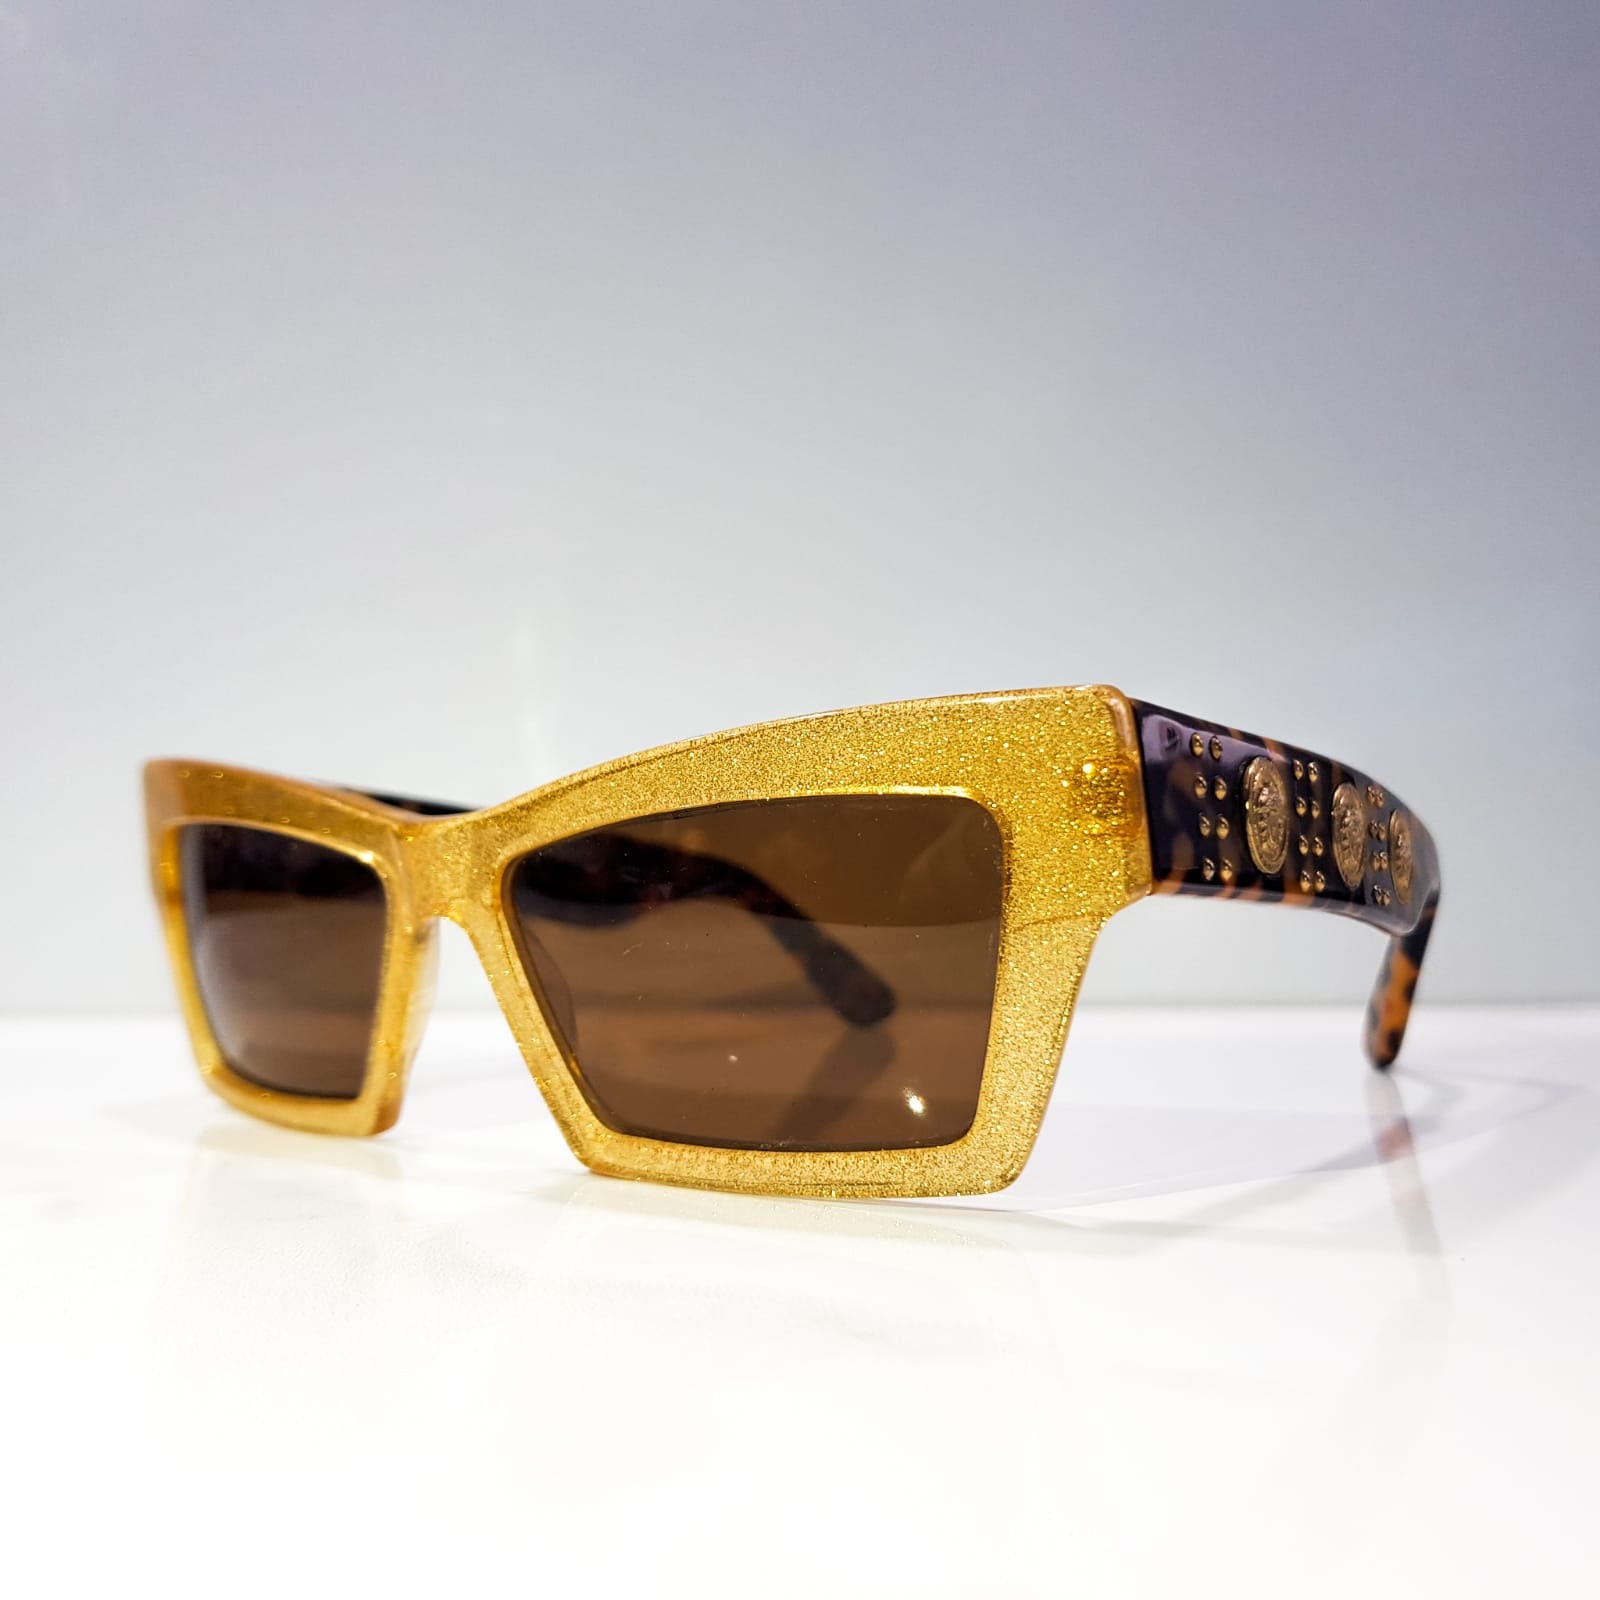 Gianni Versace S16 Vintage Sunglasses Brille Lunette -  Hong Kong